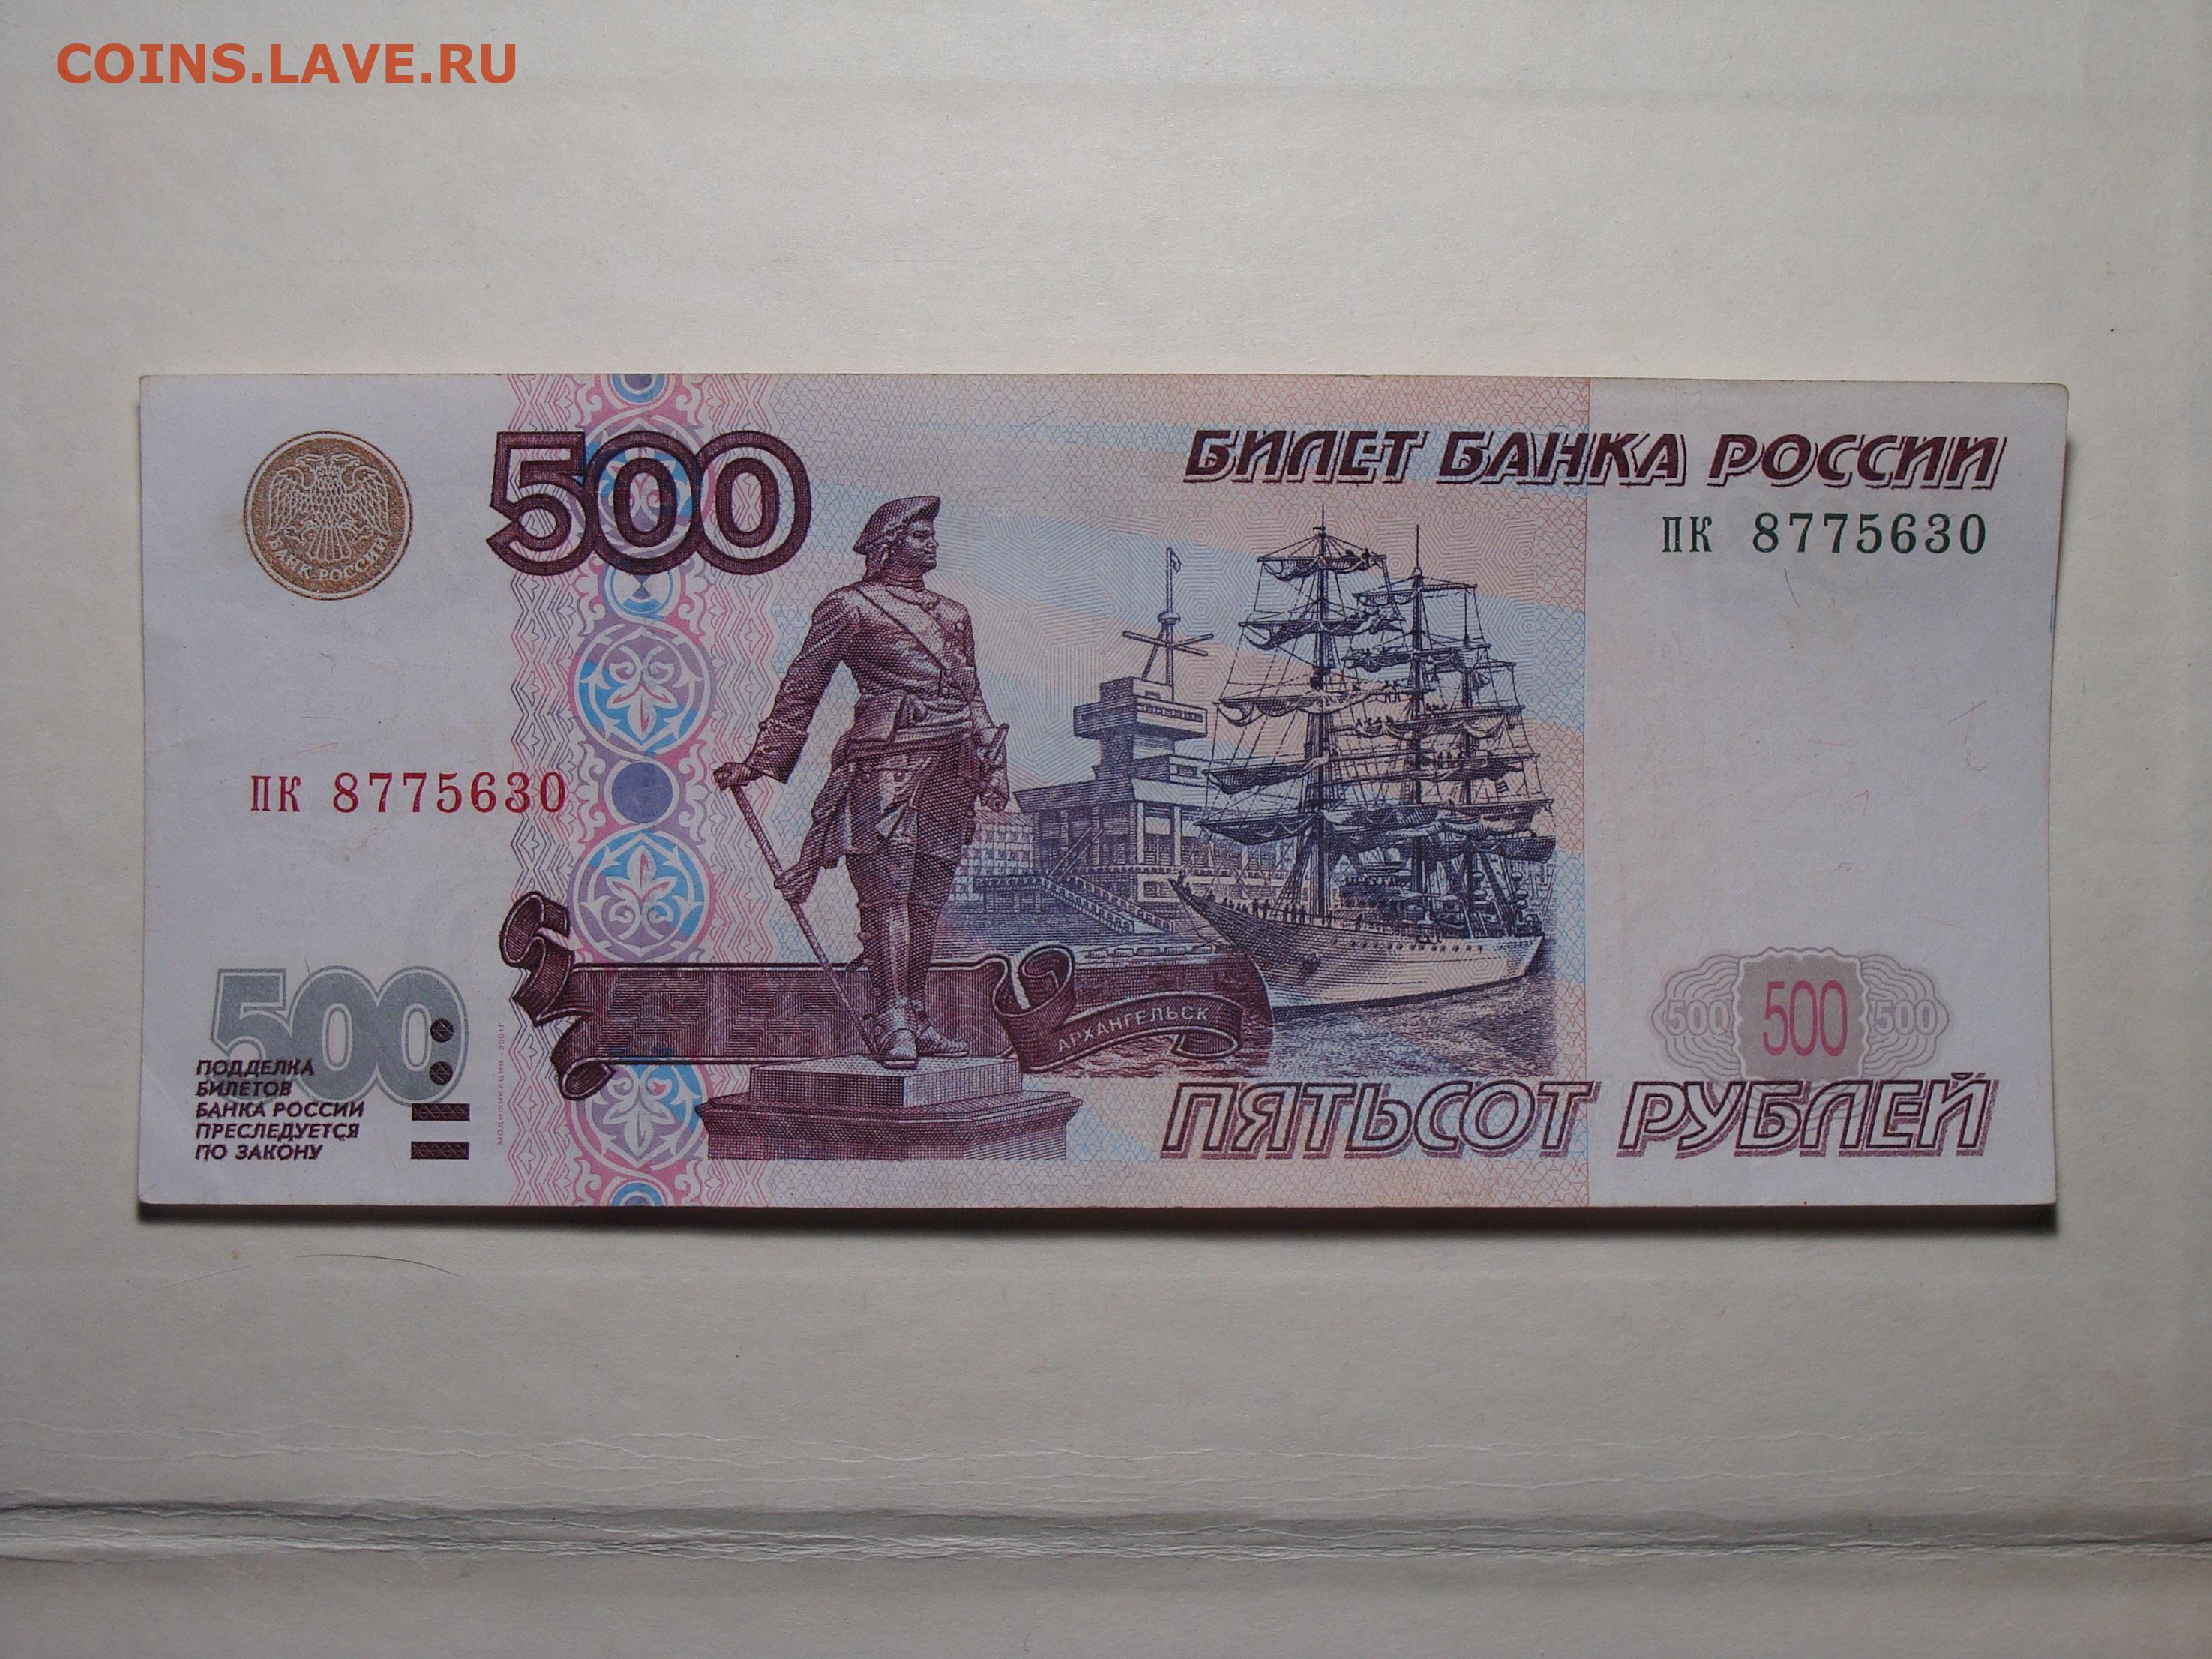 500 рублей на steam фото 89